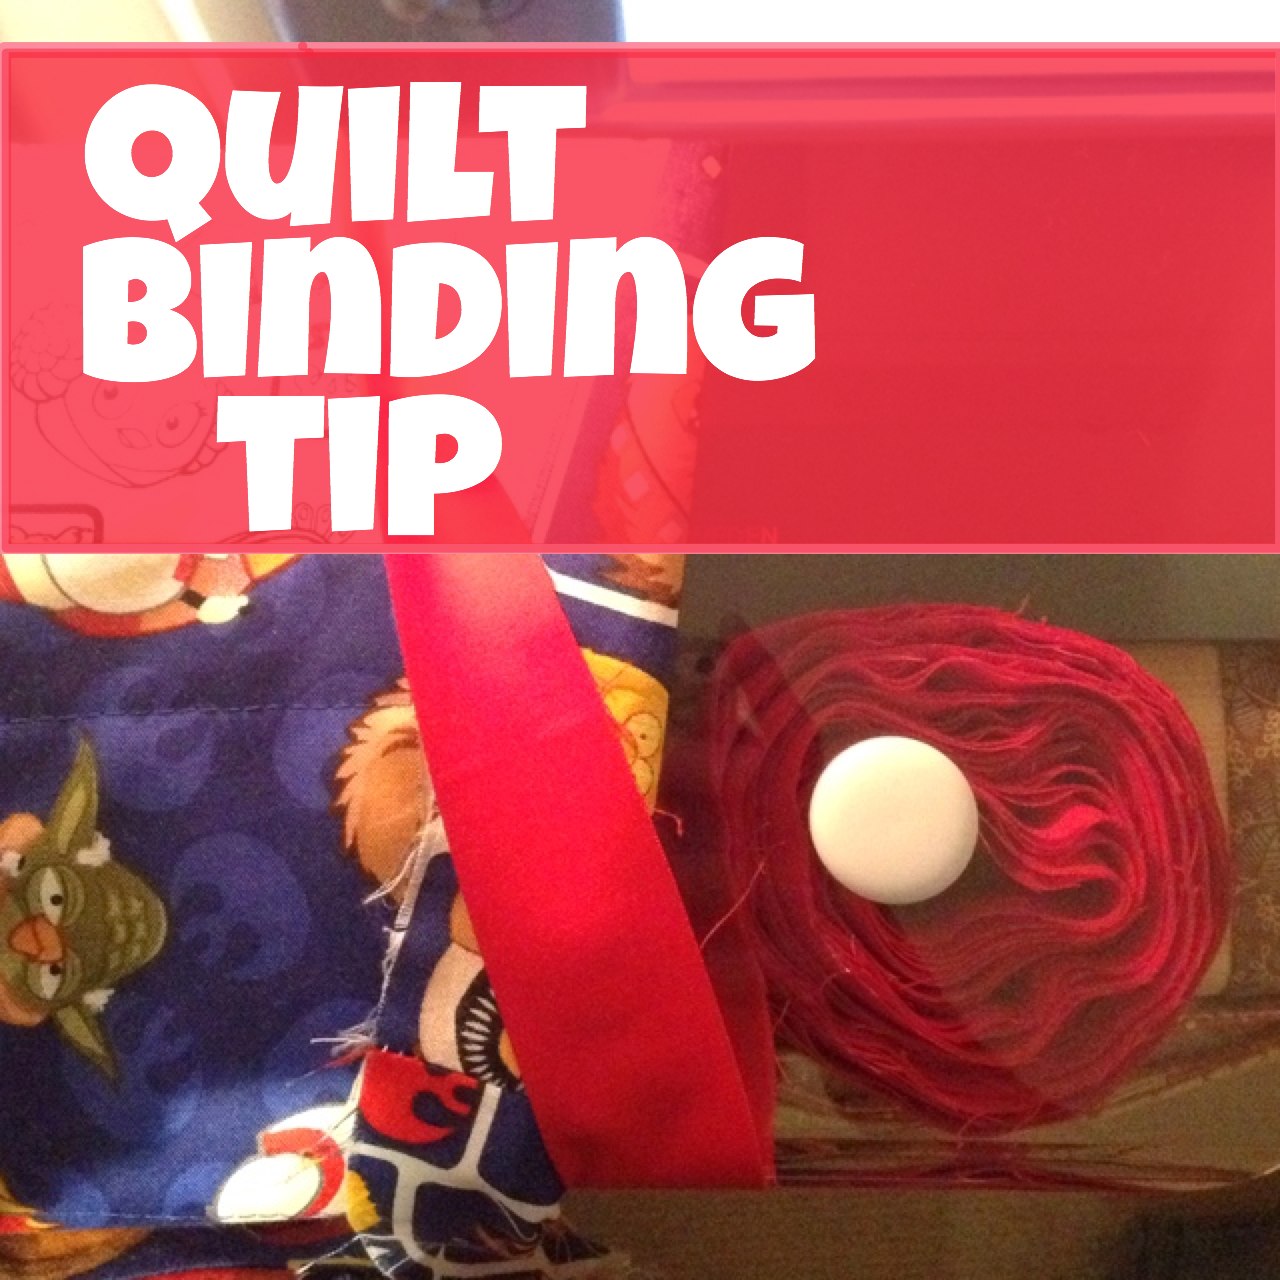 Quilt Binding Tip